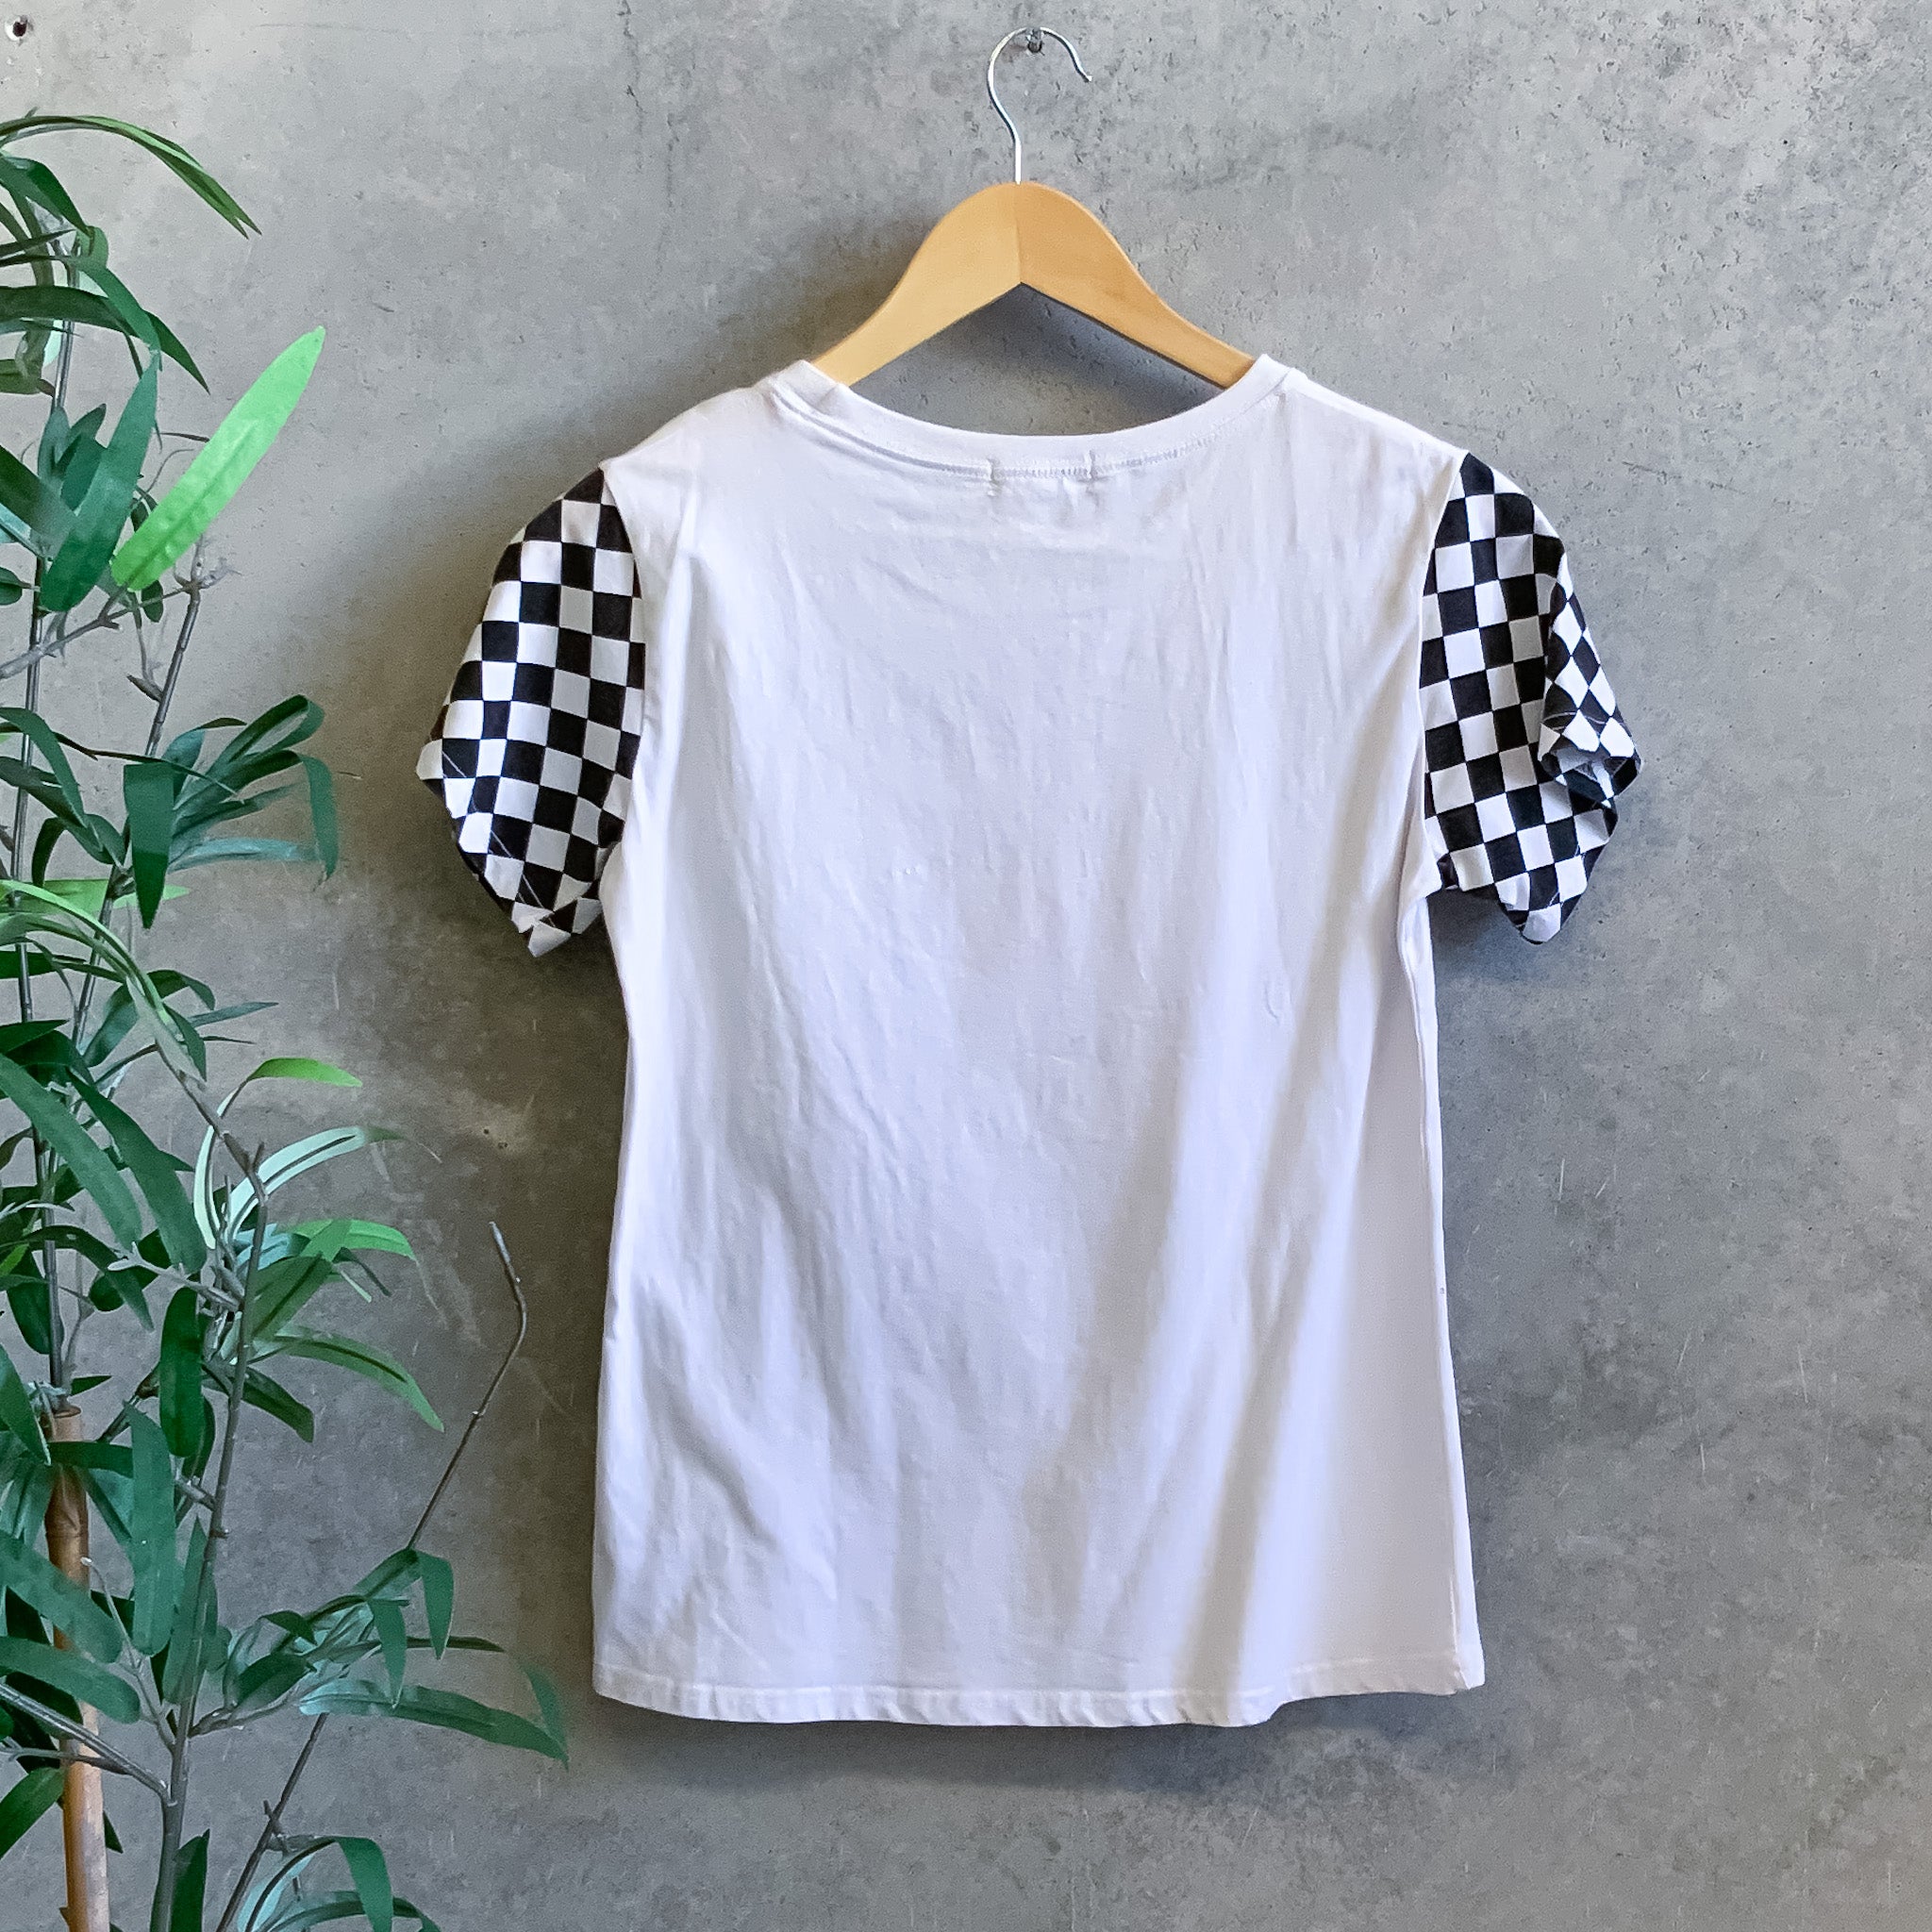 XUBAWAWA White Chic Little Girl Print Checkered Sleeves T Shirt - Size S